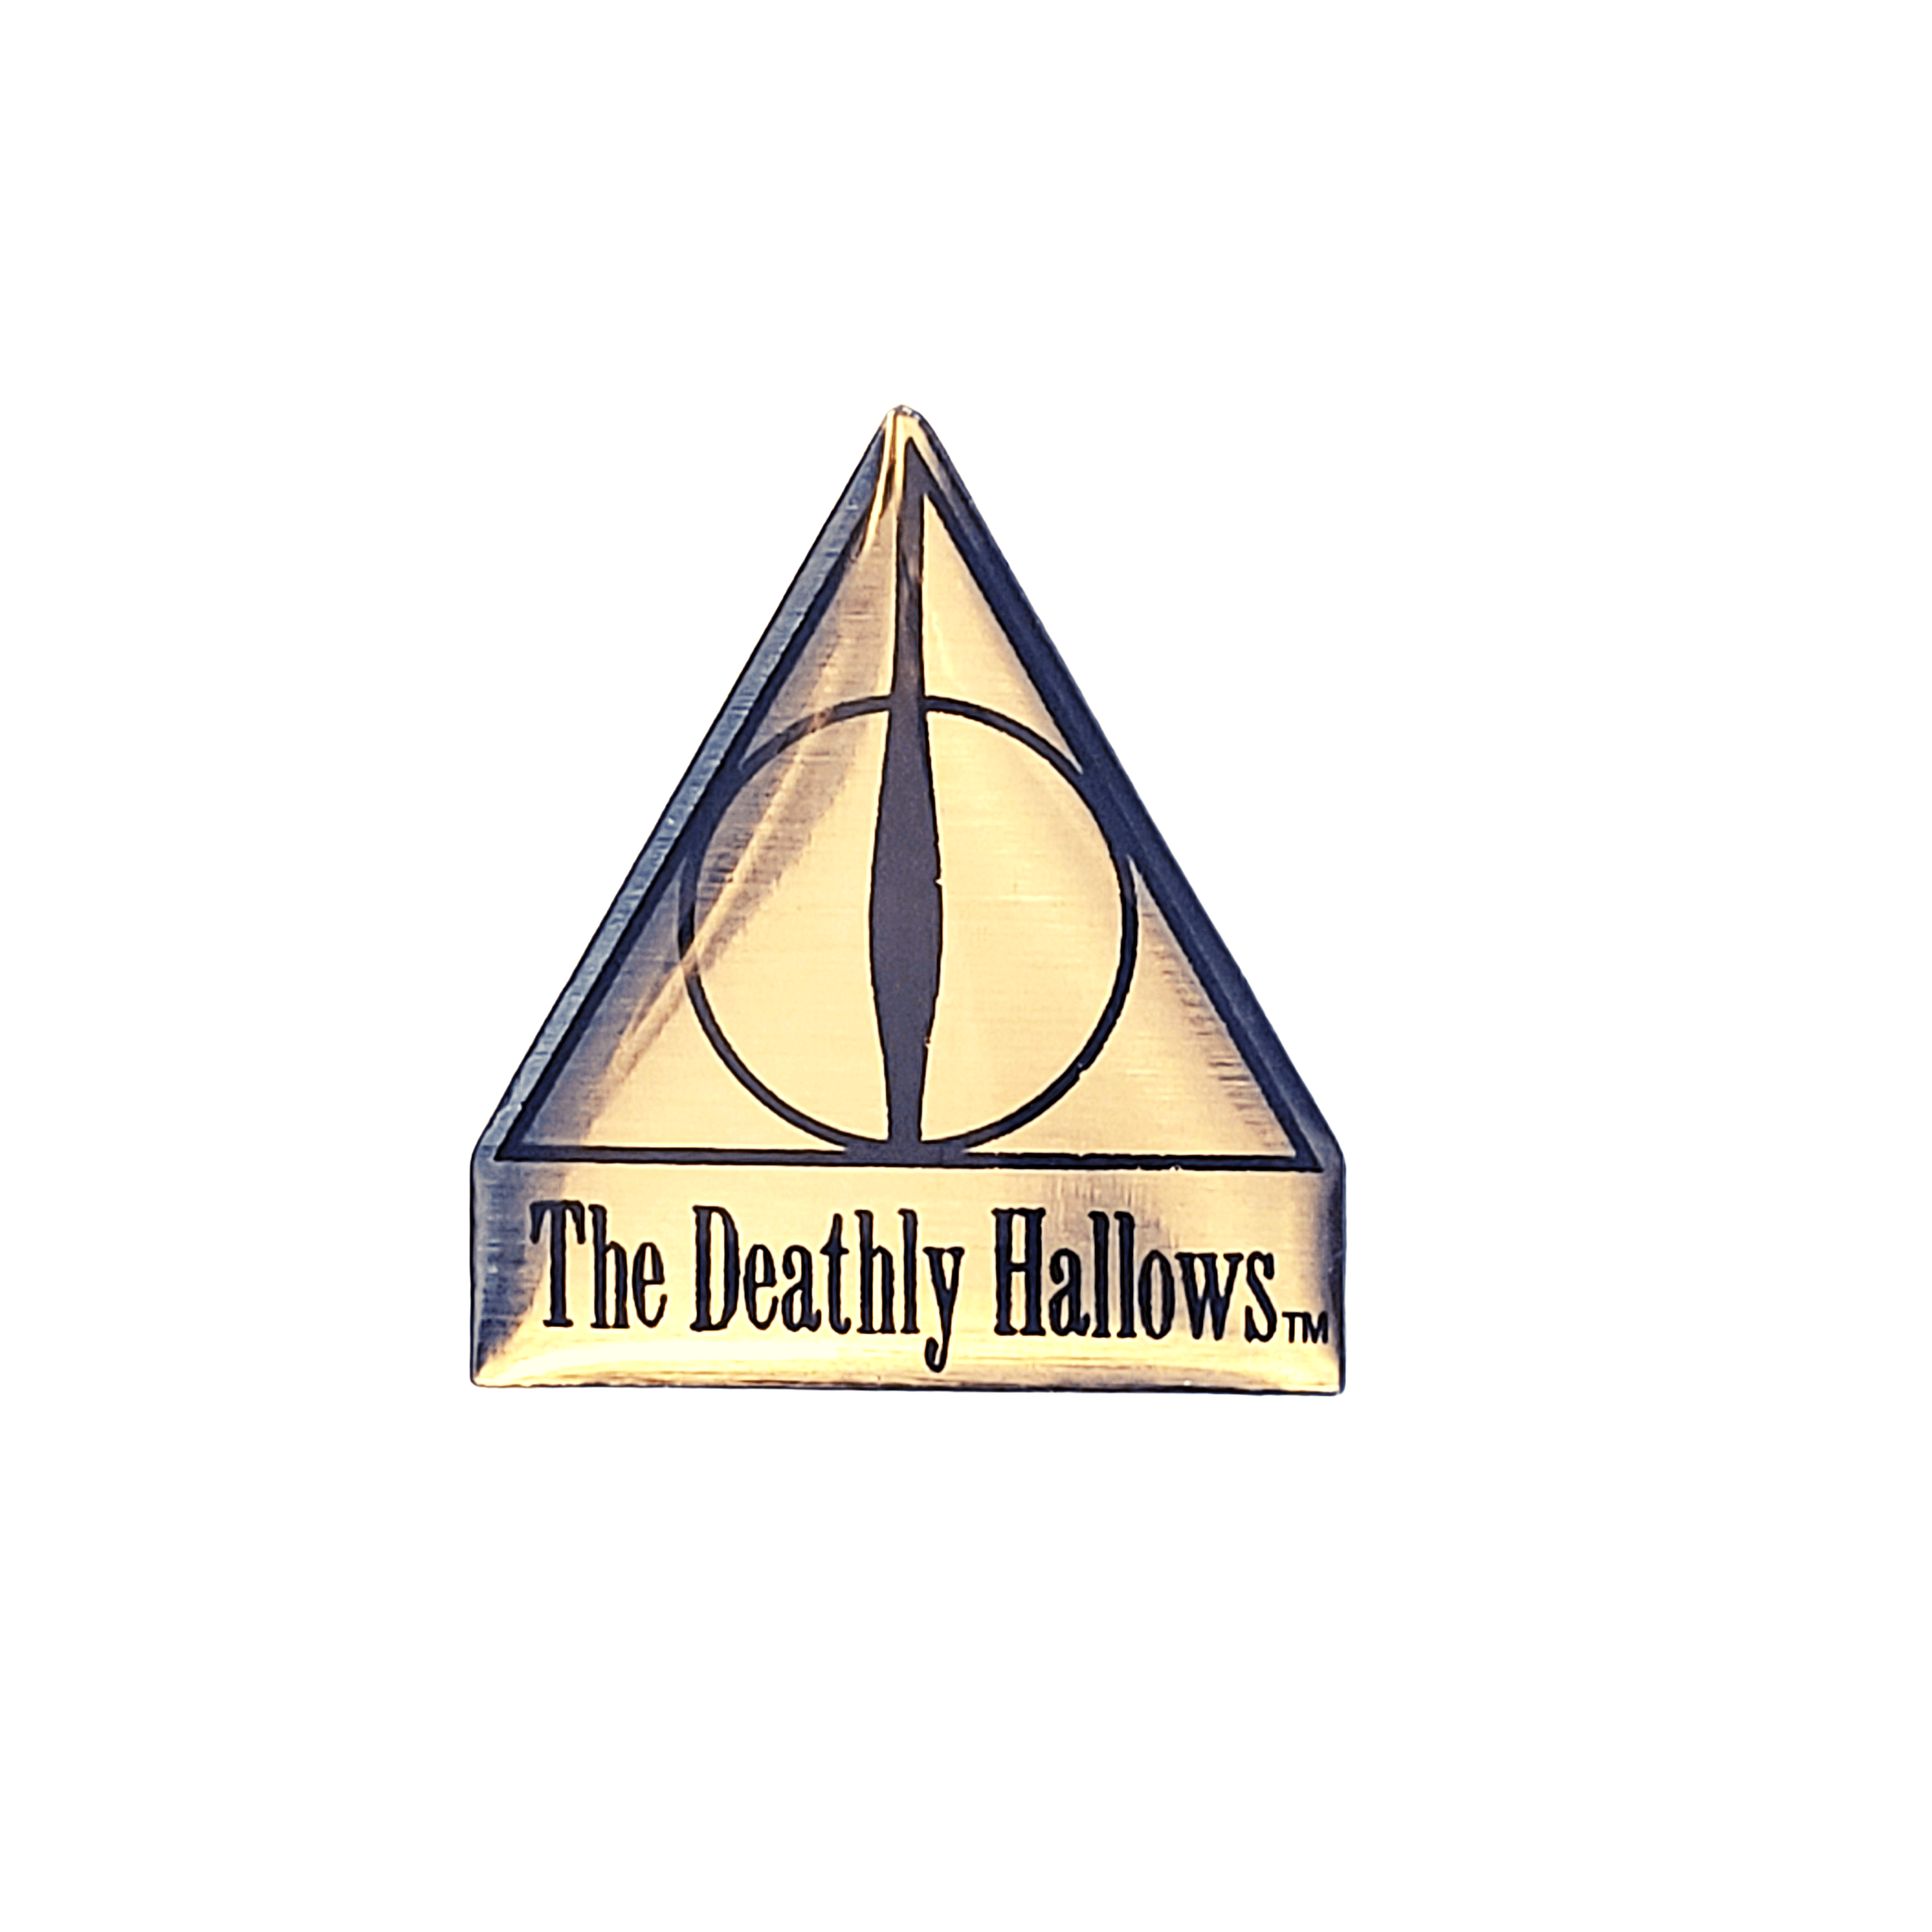 Harry Potter House of Ravenclaw British Logo Metal Enamel Pin